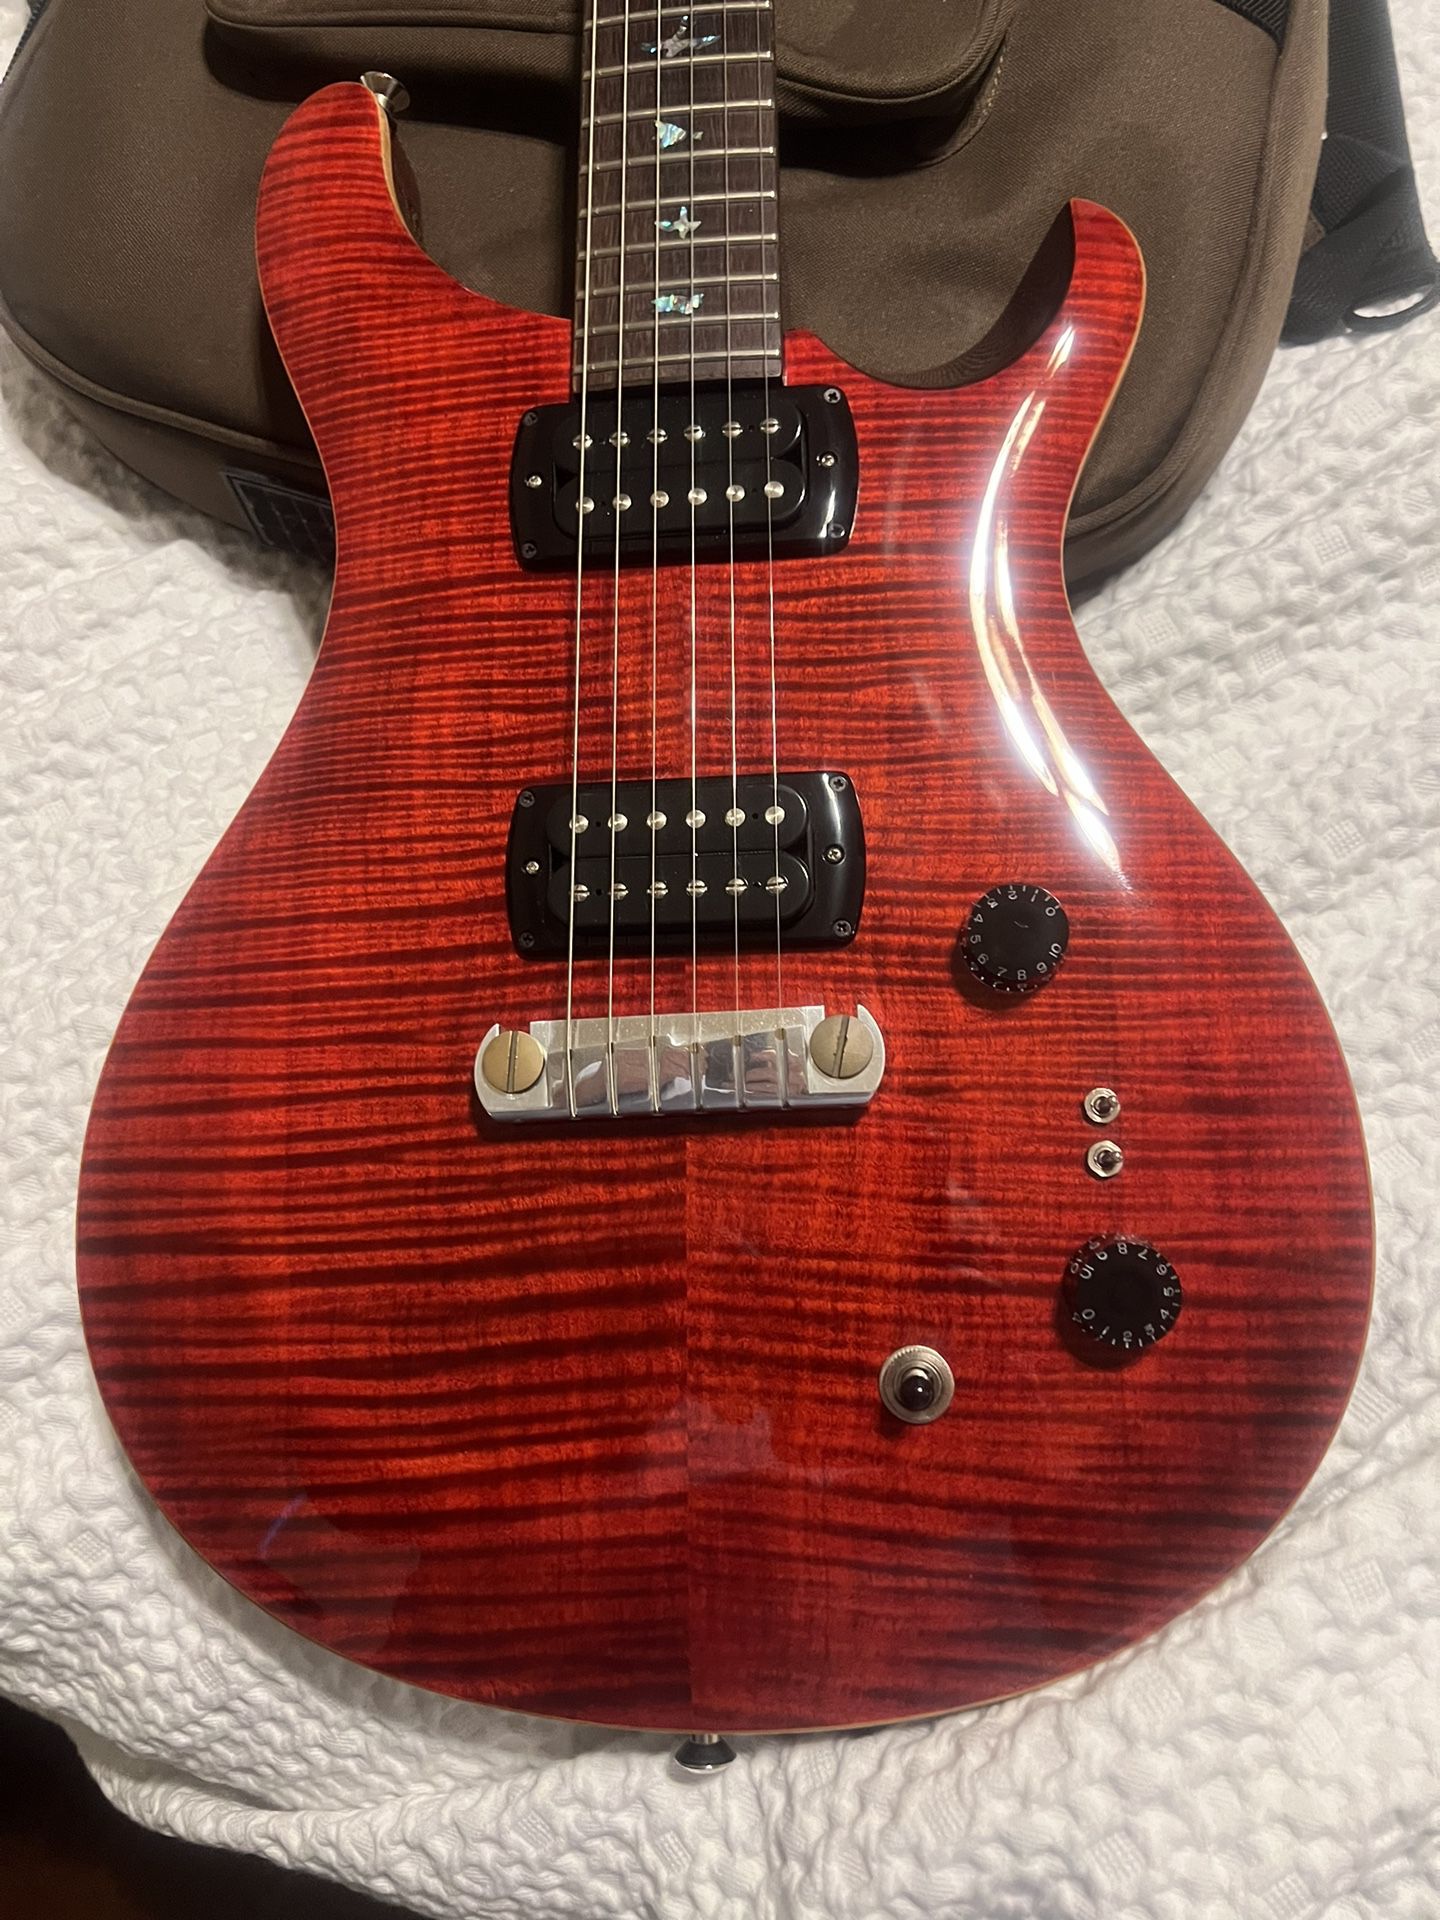 PRS Pauls Guitar Rare Red Color